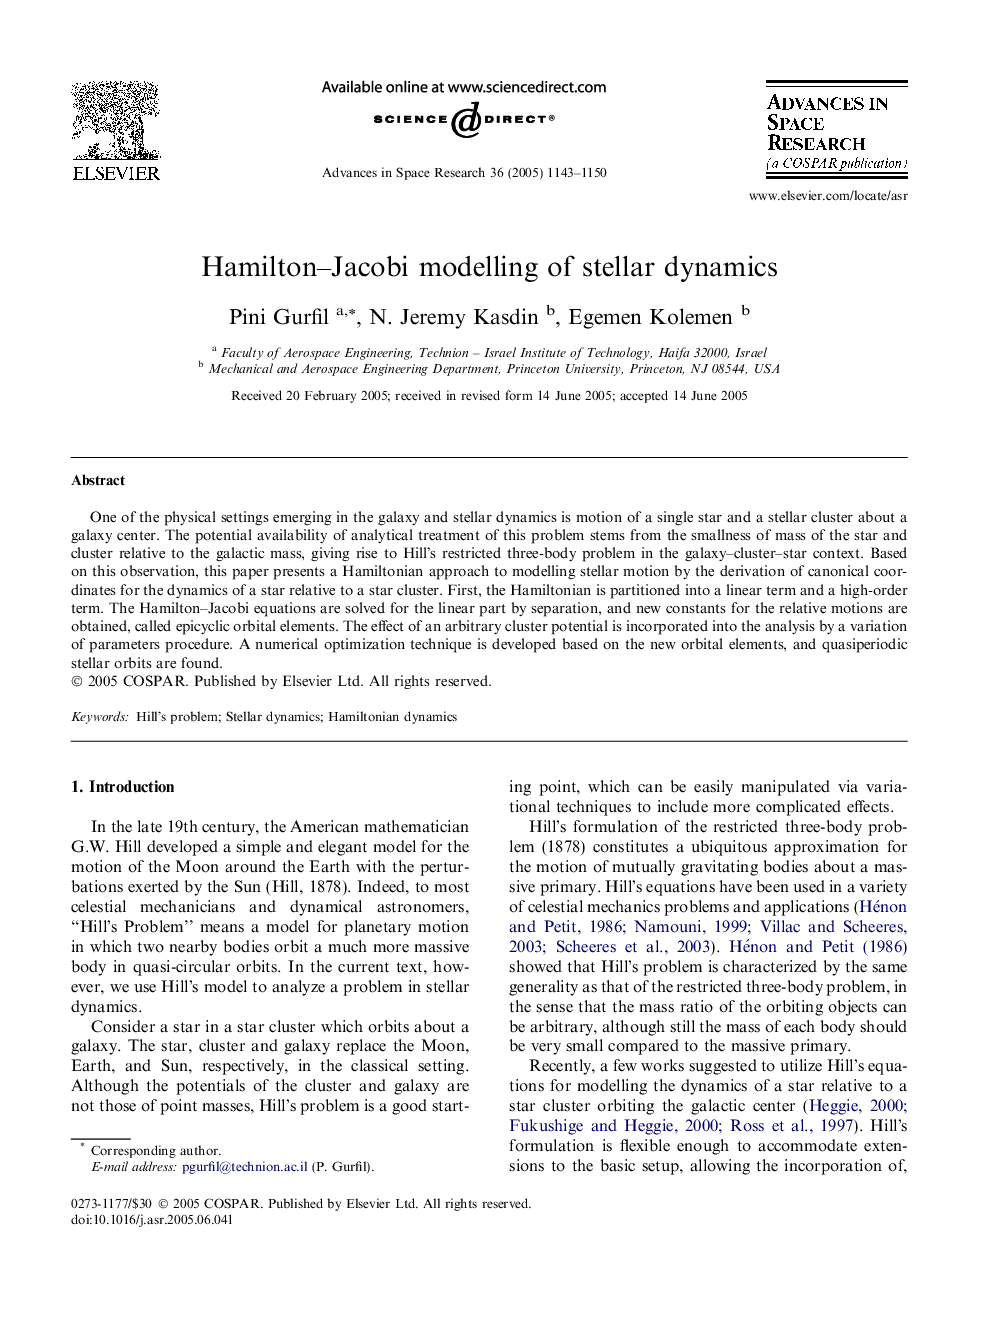 Hamilton-Jacobi modelling of stellar dynamics